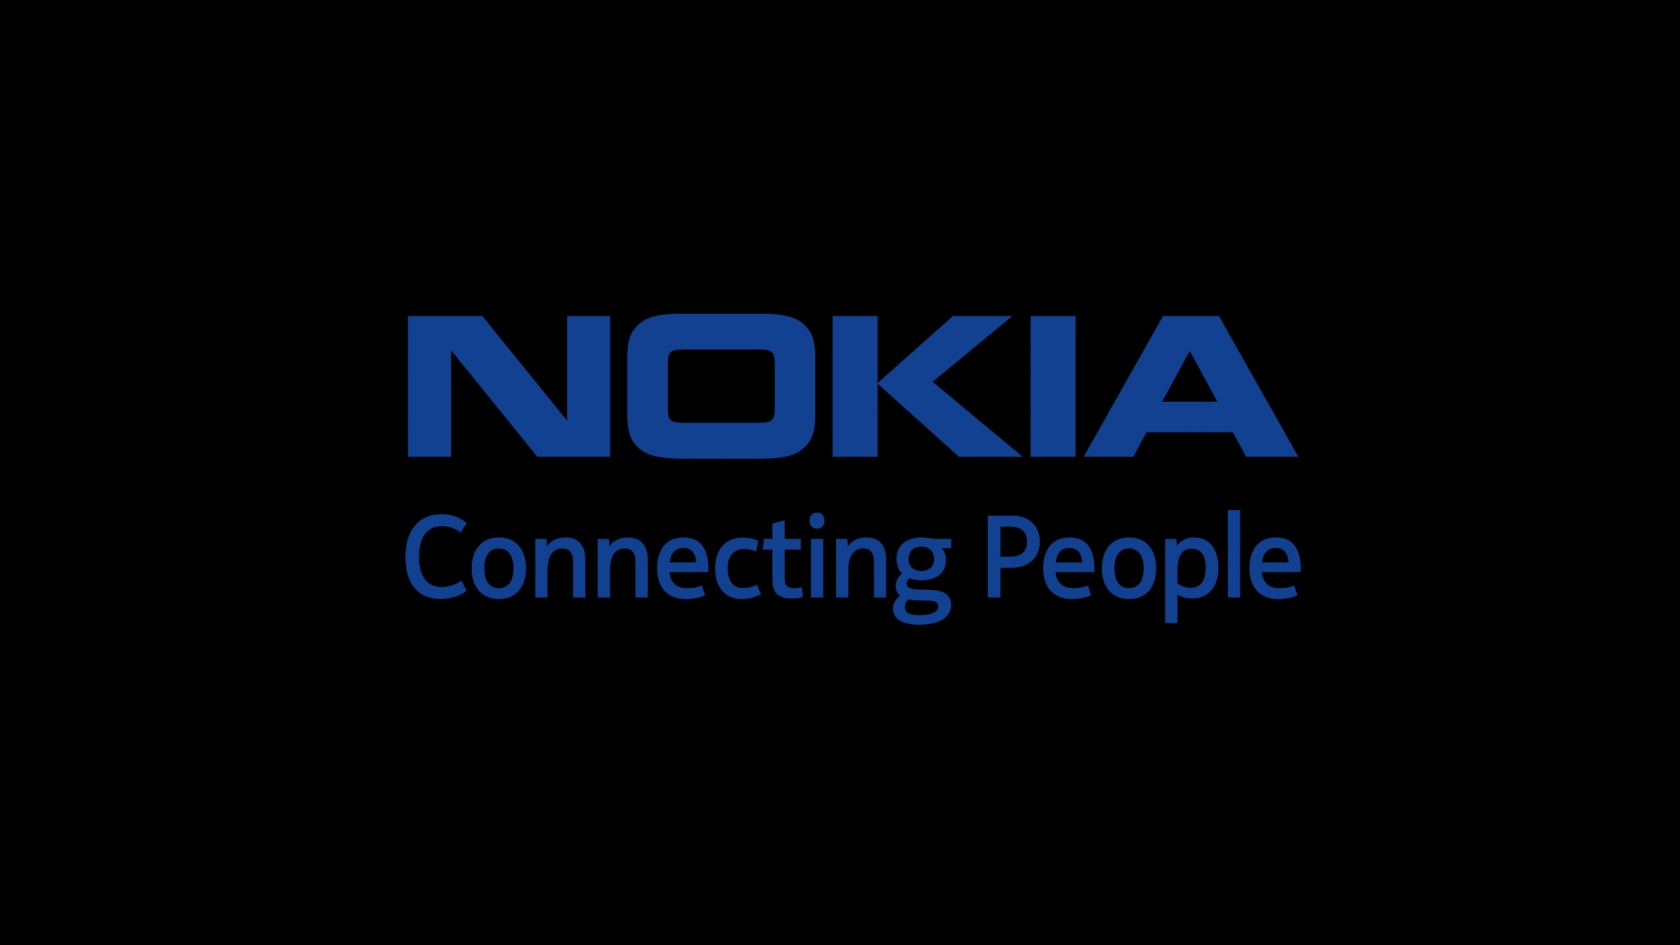 Nokia for 1680 x 945 HDTV resolution